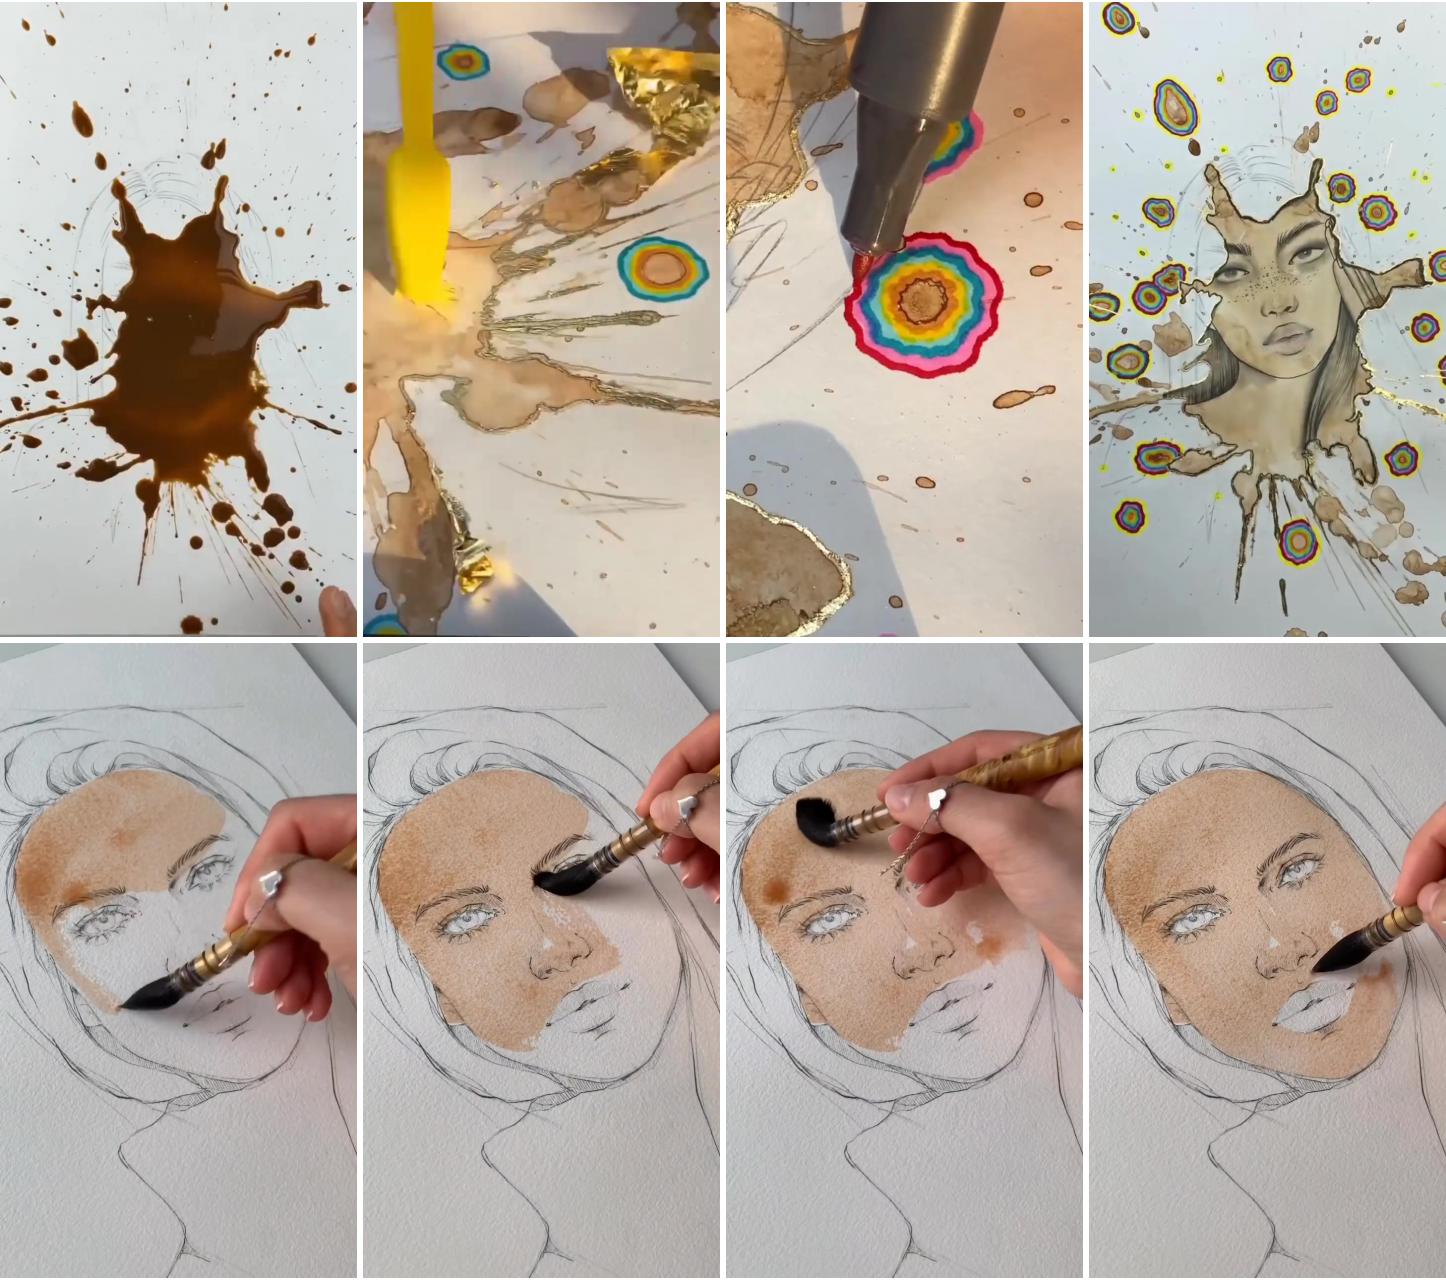 Amazing coffee spill art tutorial ,,most creative painting art | video credit. : victoria_kagalovska